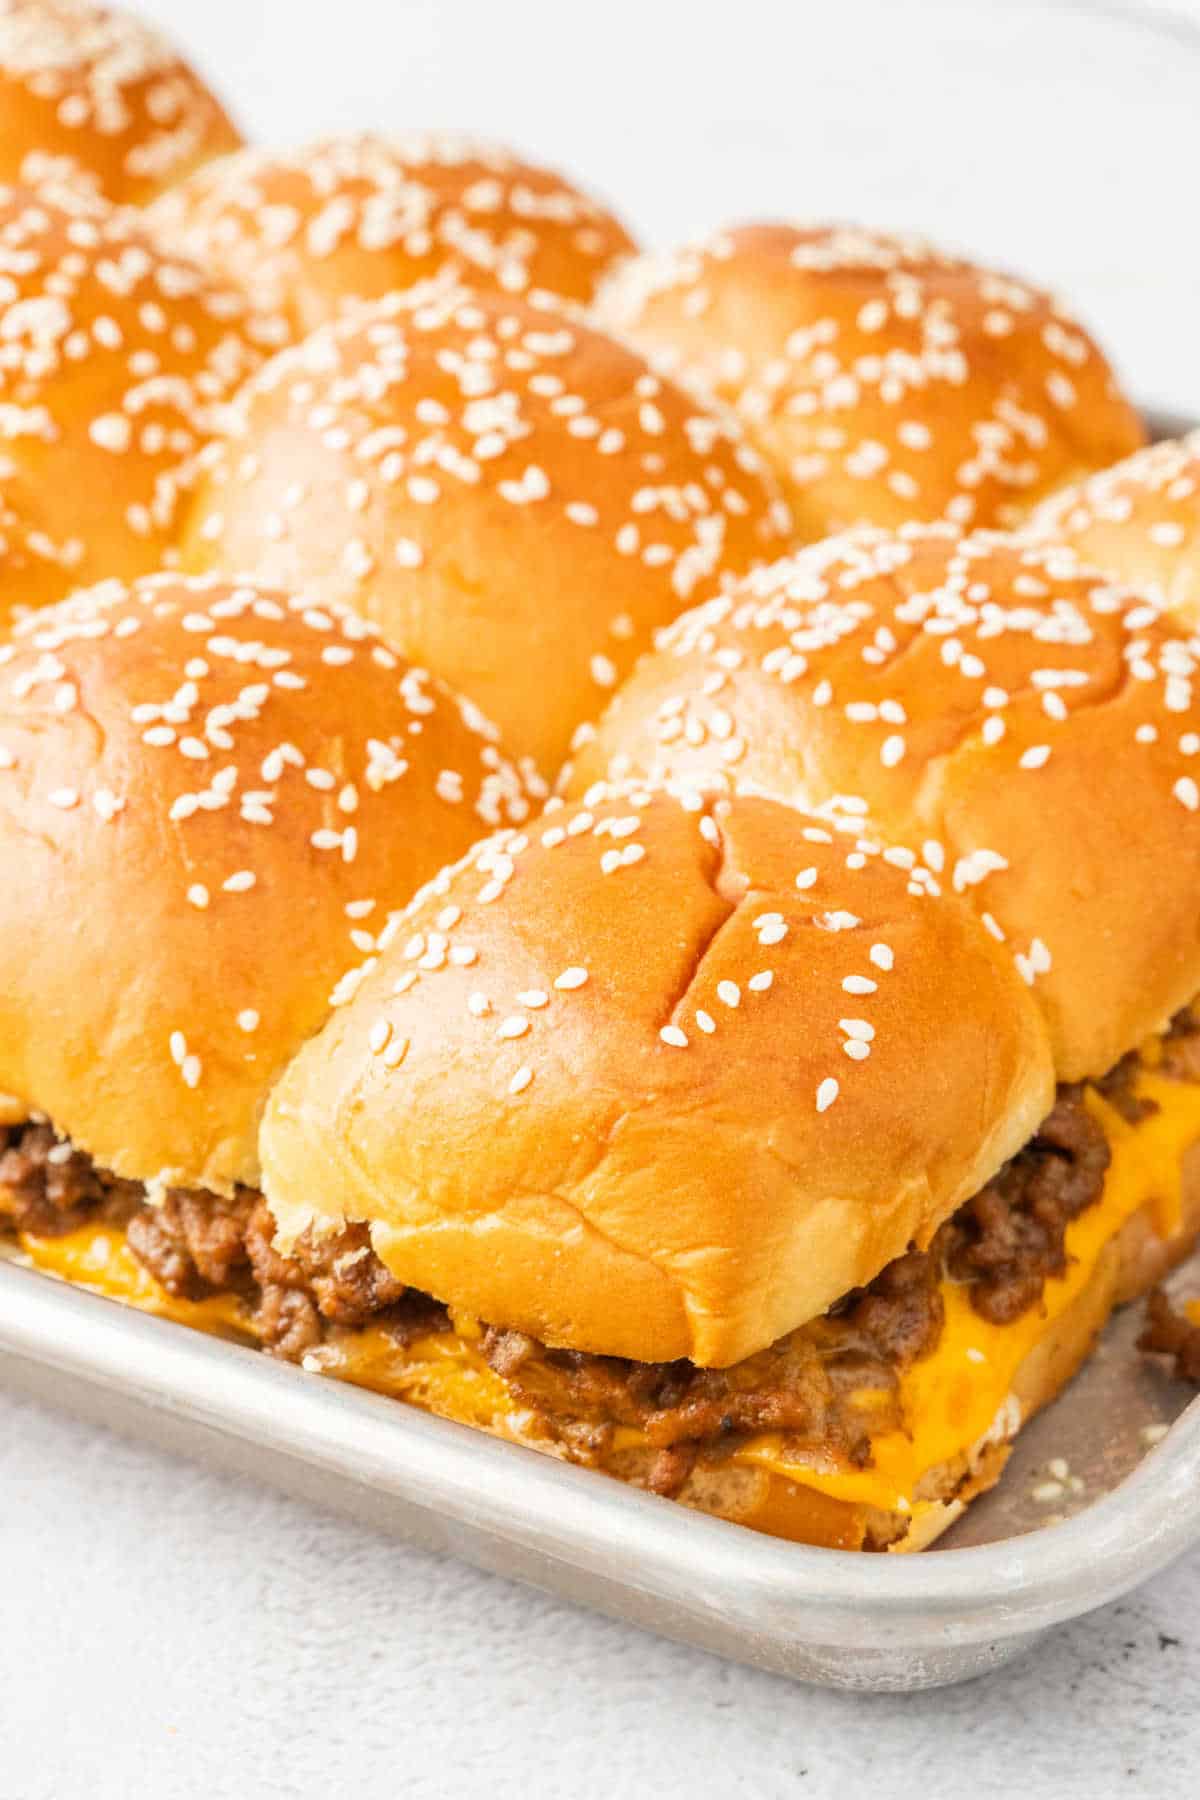 Cheeseburger Sliders on a baking tray.